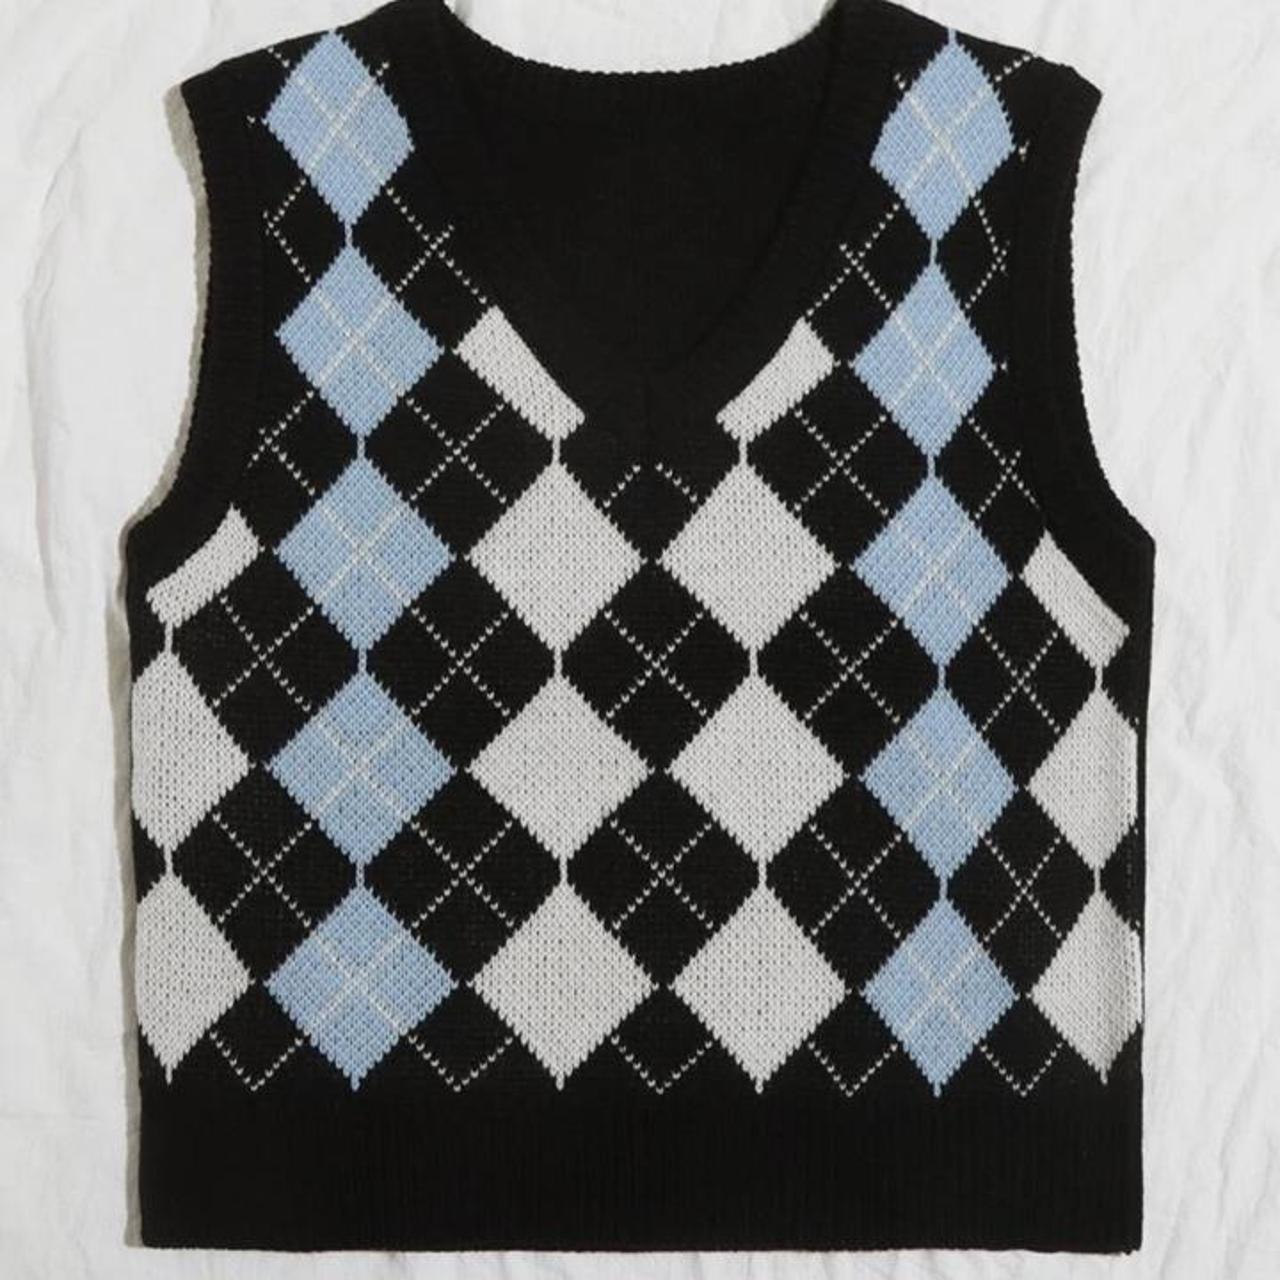 Cute sweater vest that’s never been worn. 💙size... - Depop